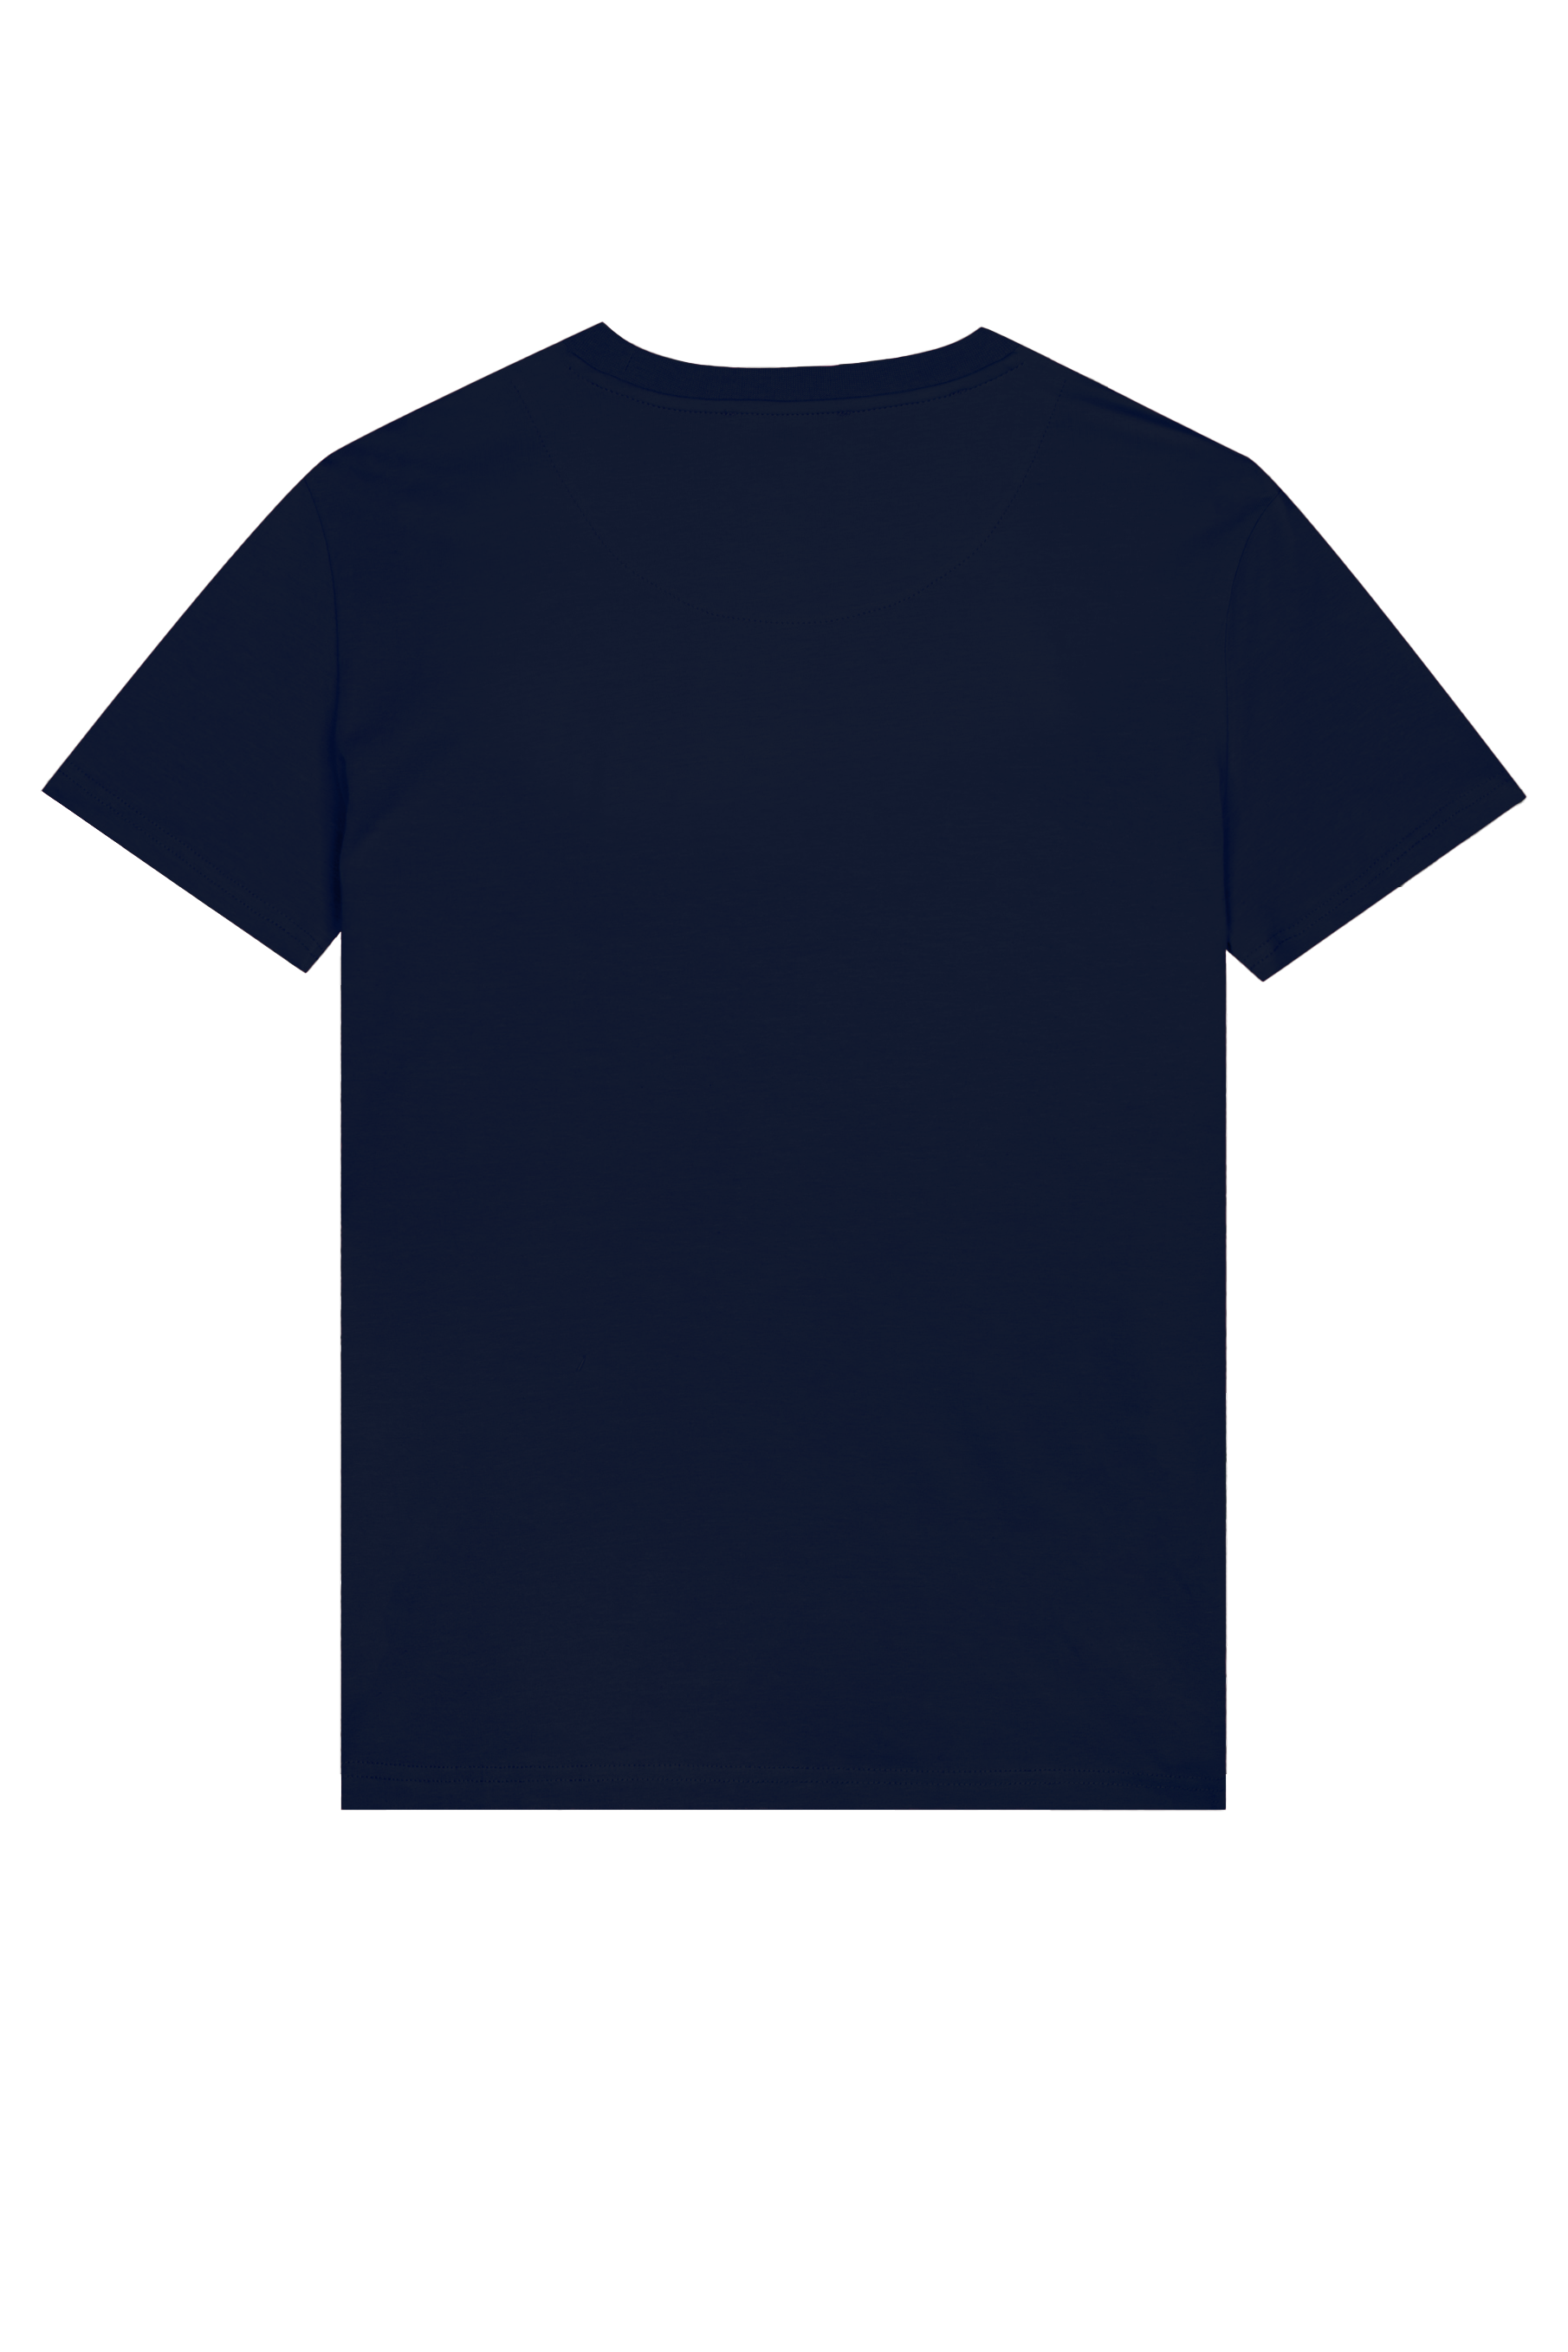 Basic Capsule Navy Tshirt